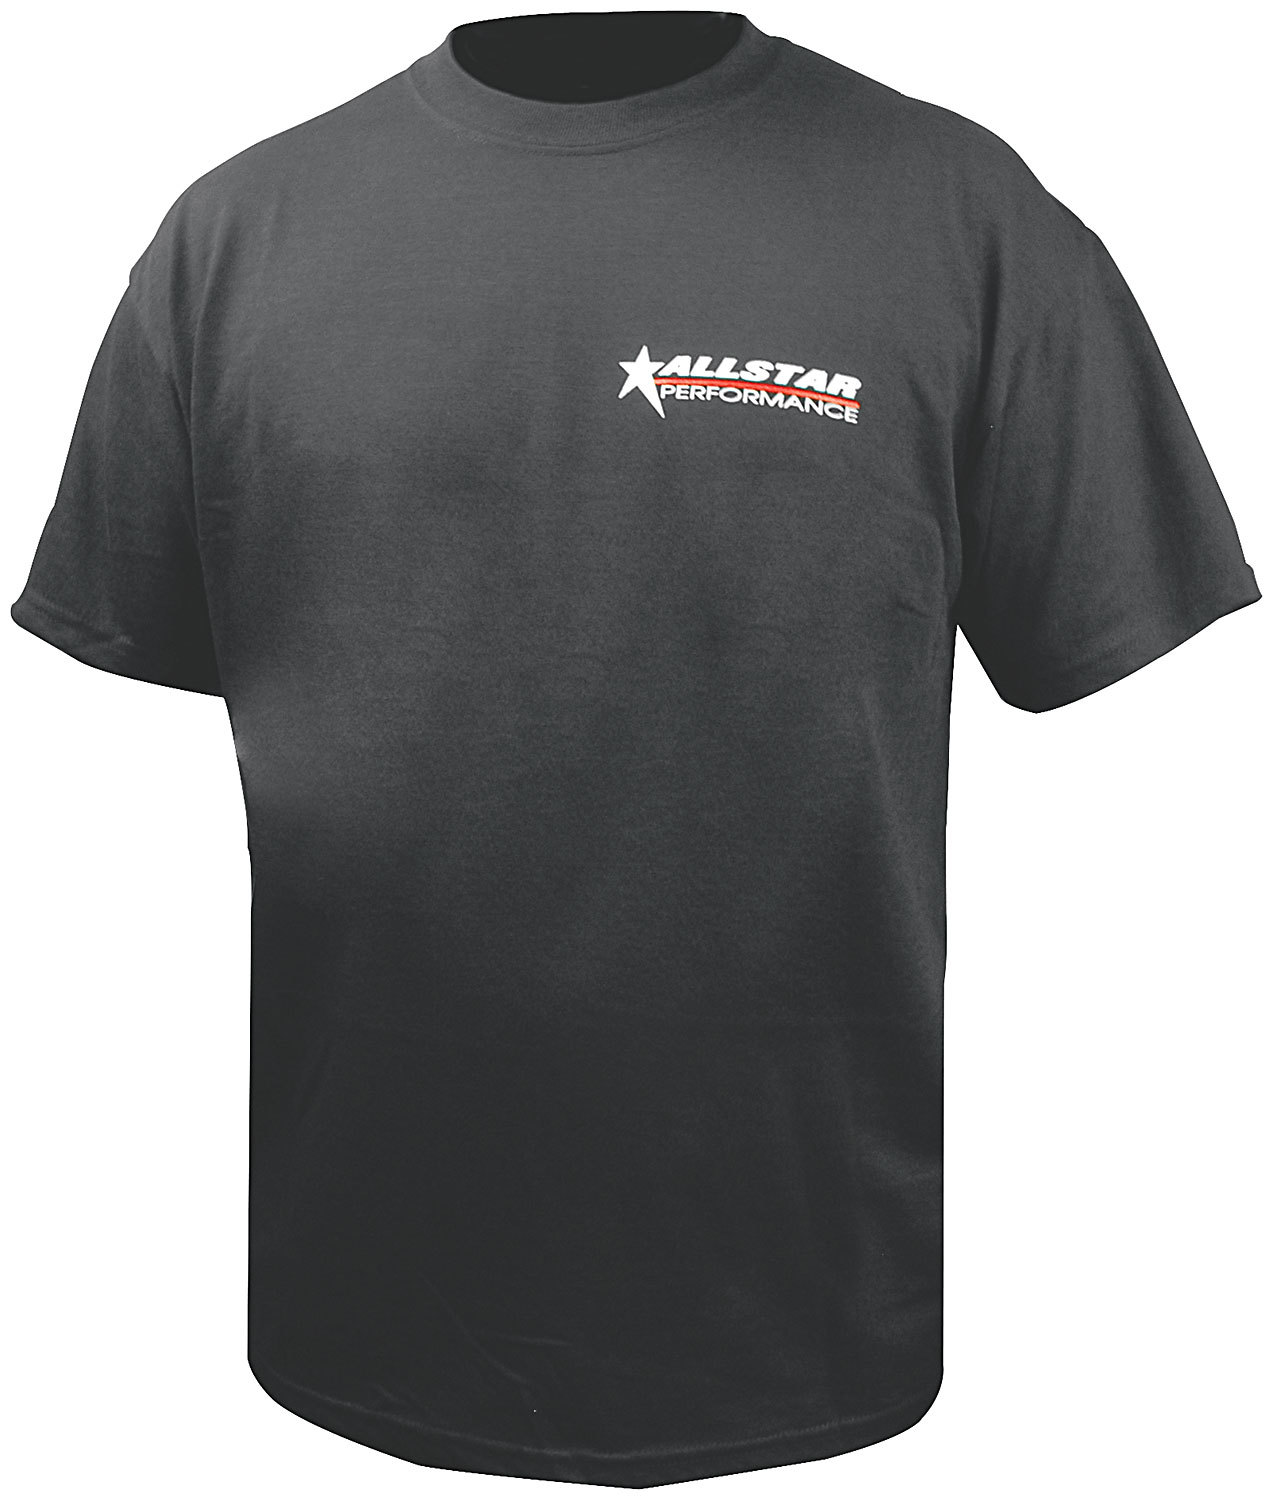 Allstar Performance  T-Shirt Charcoal Youth Medium